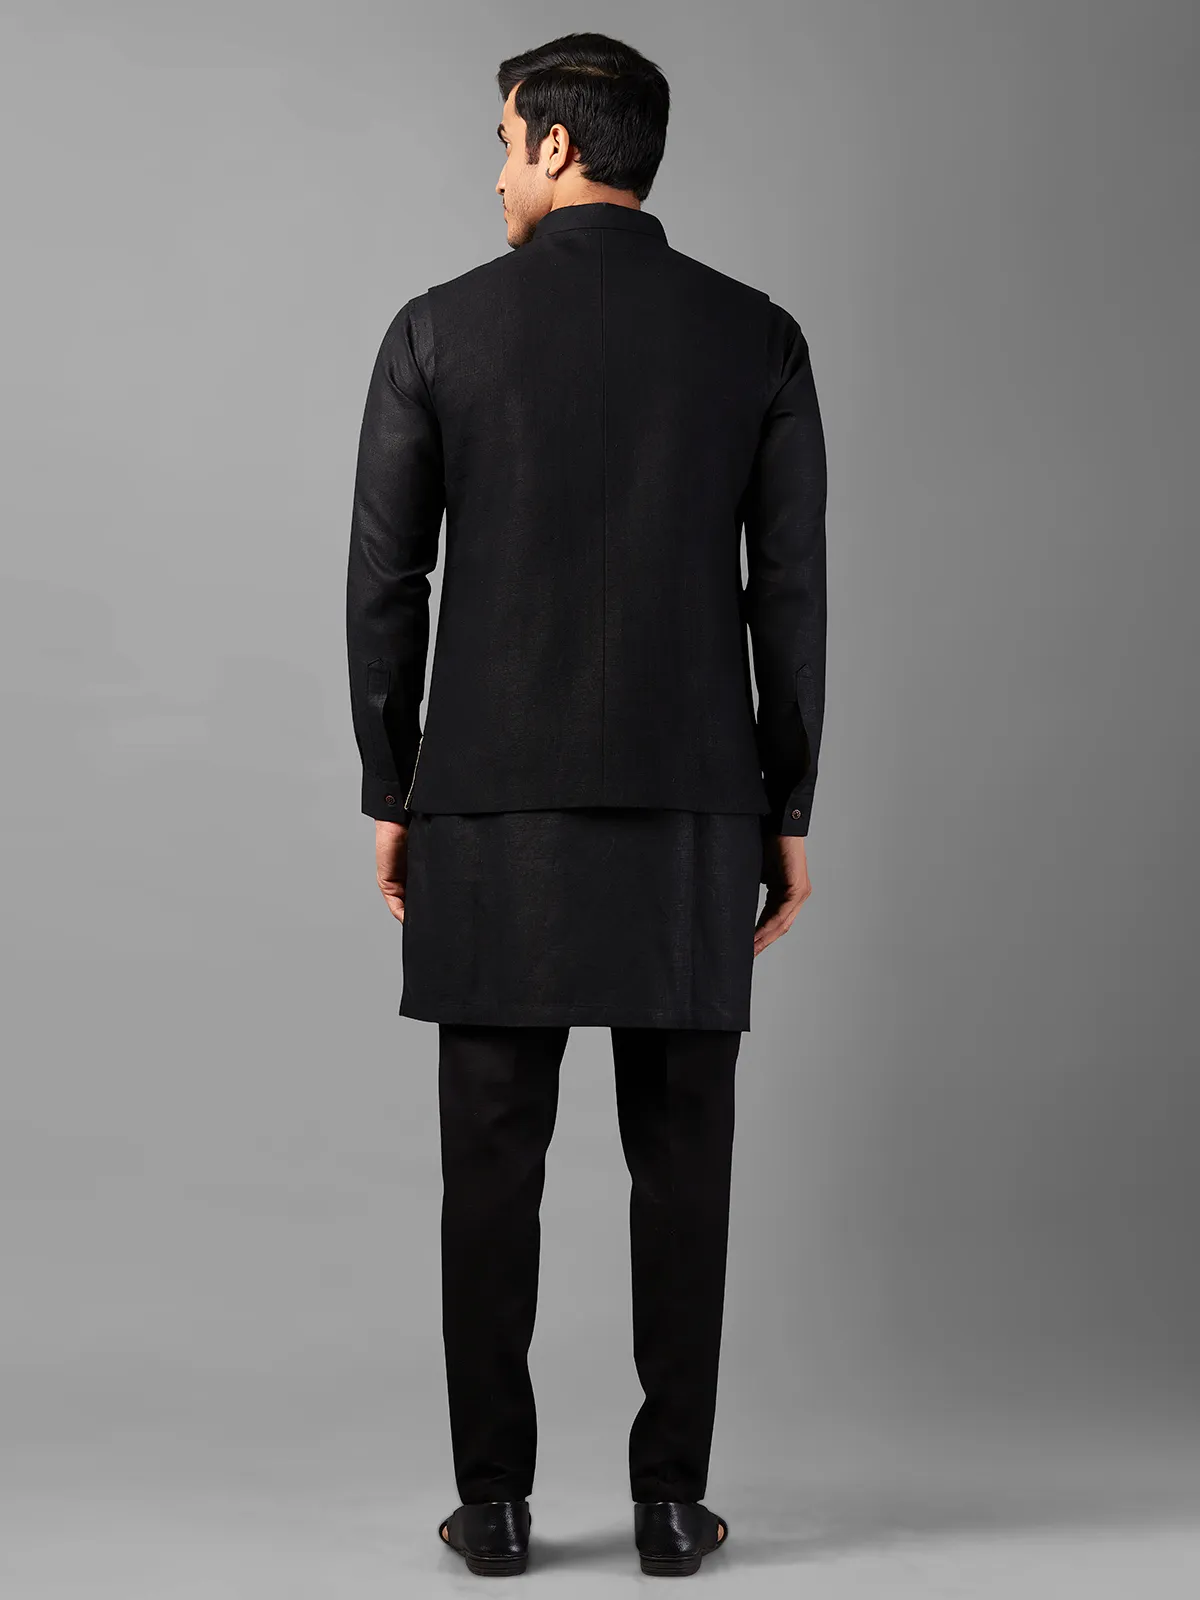 Stylish black linen waistcoat set